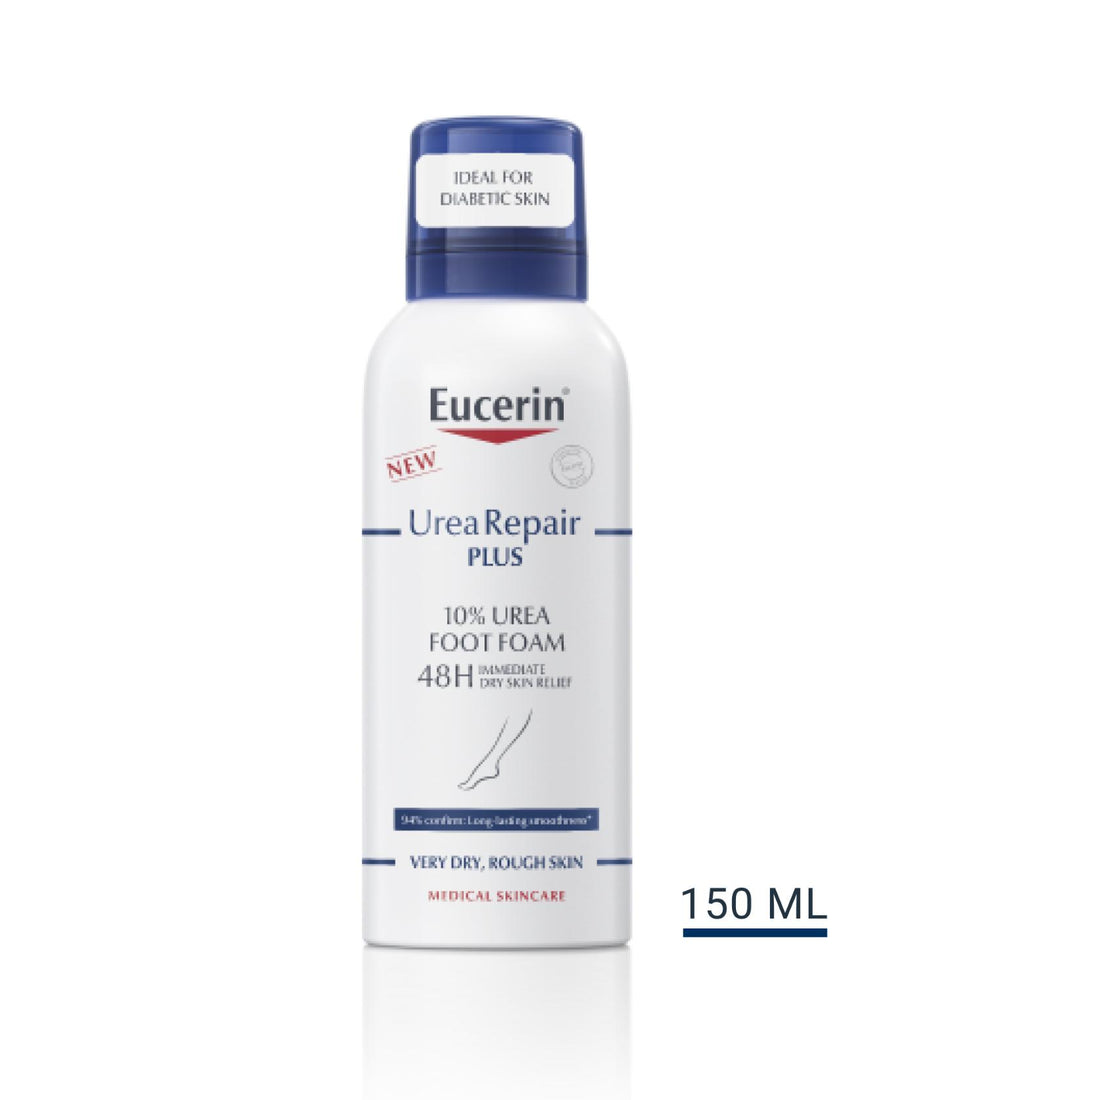 Eucerin UreaRepair Plus 10% Urea Foot Foam 150ml